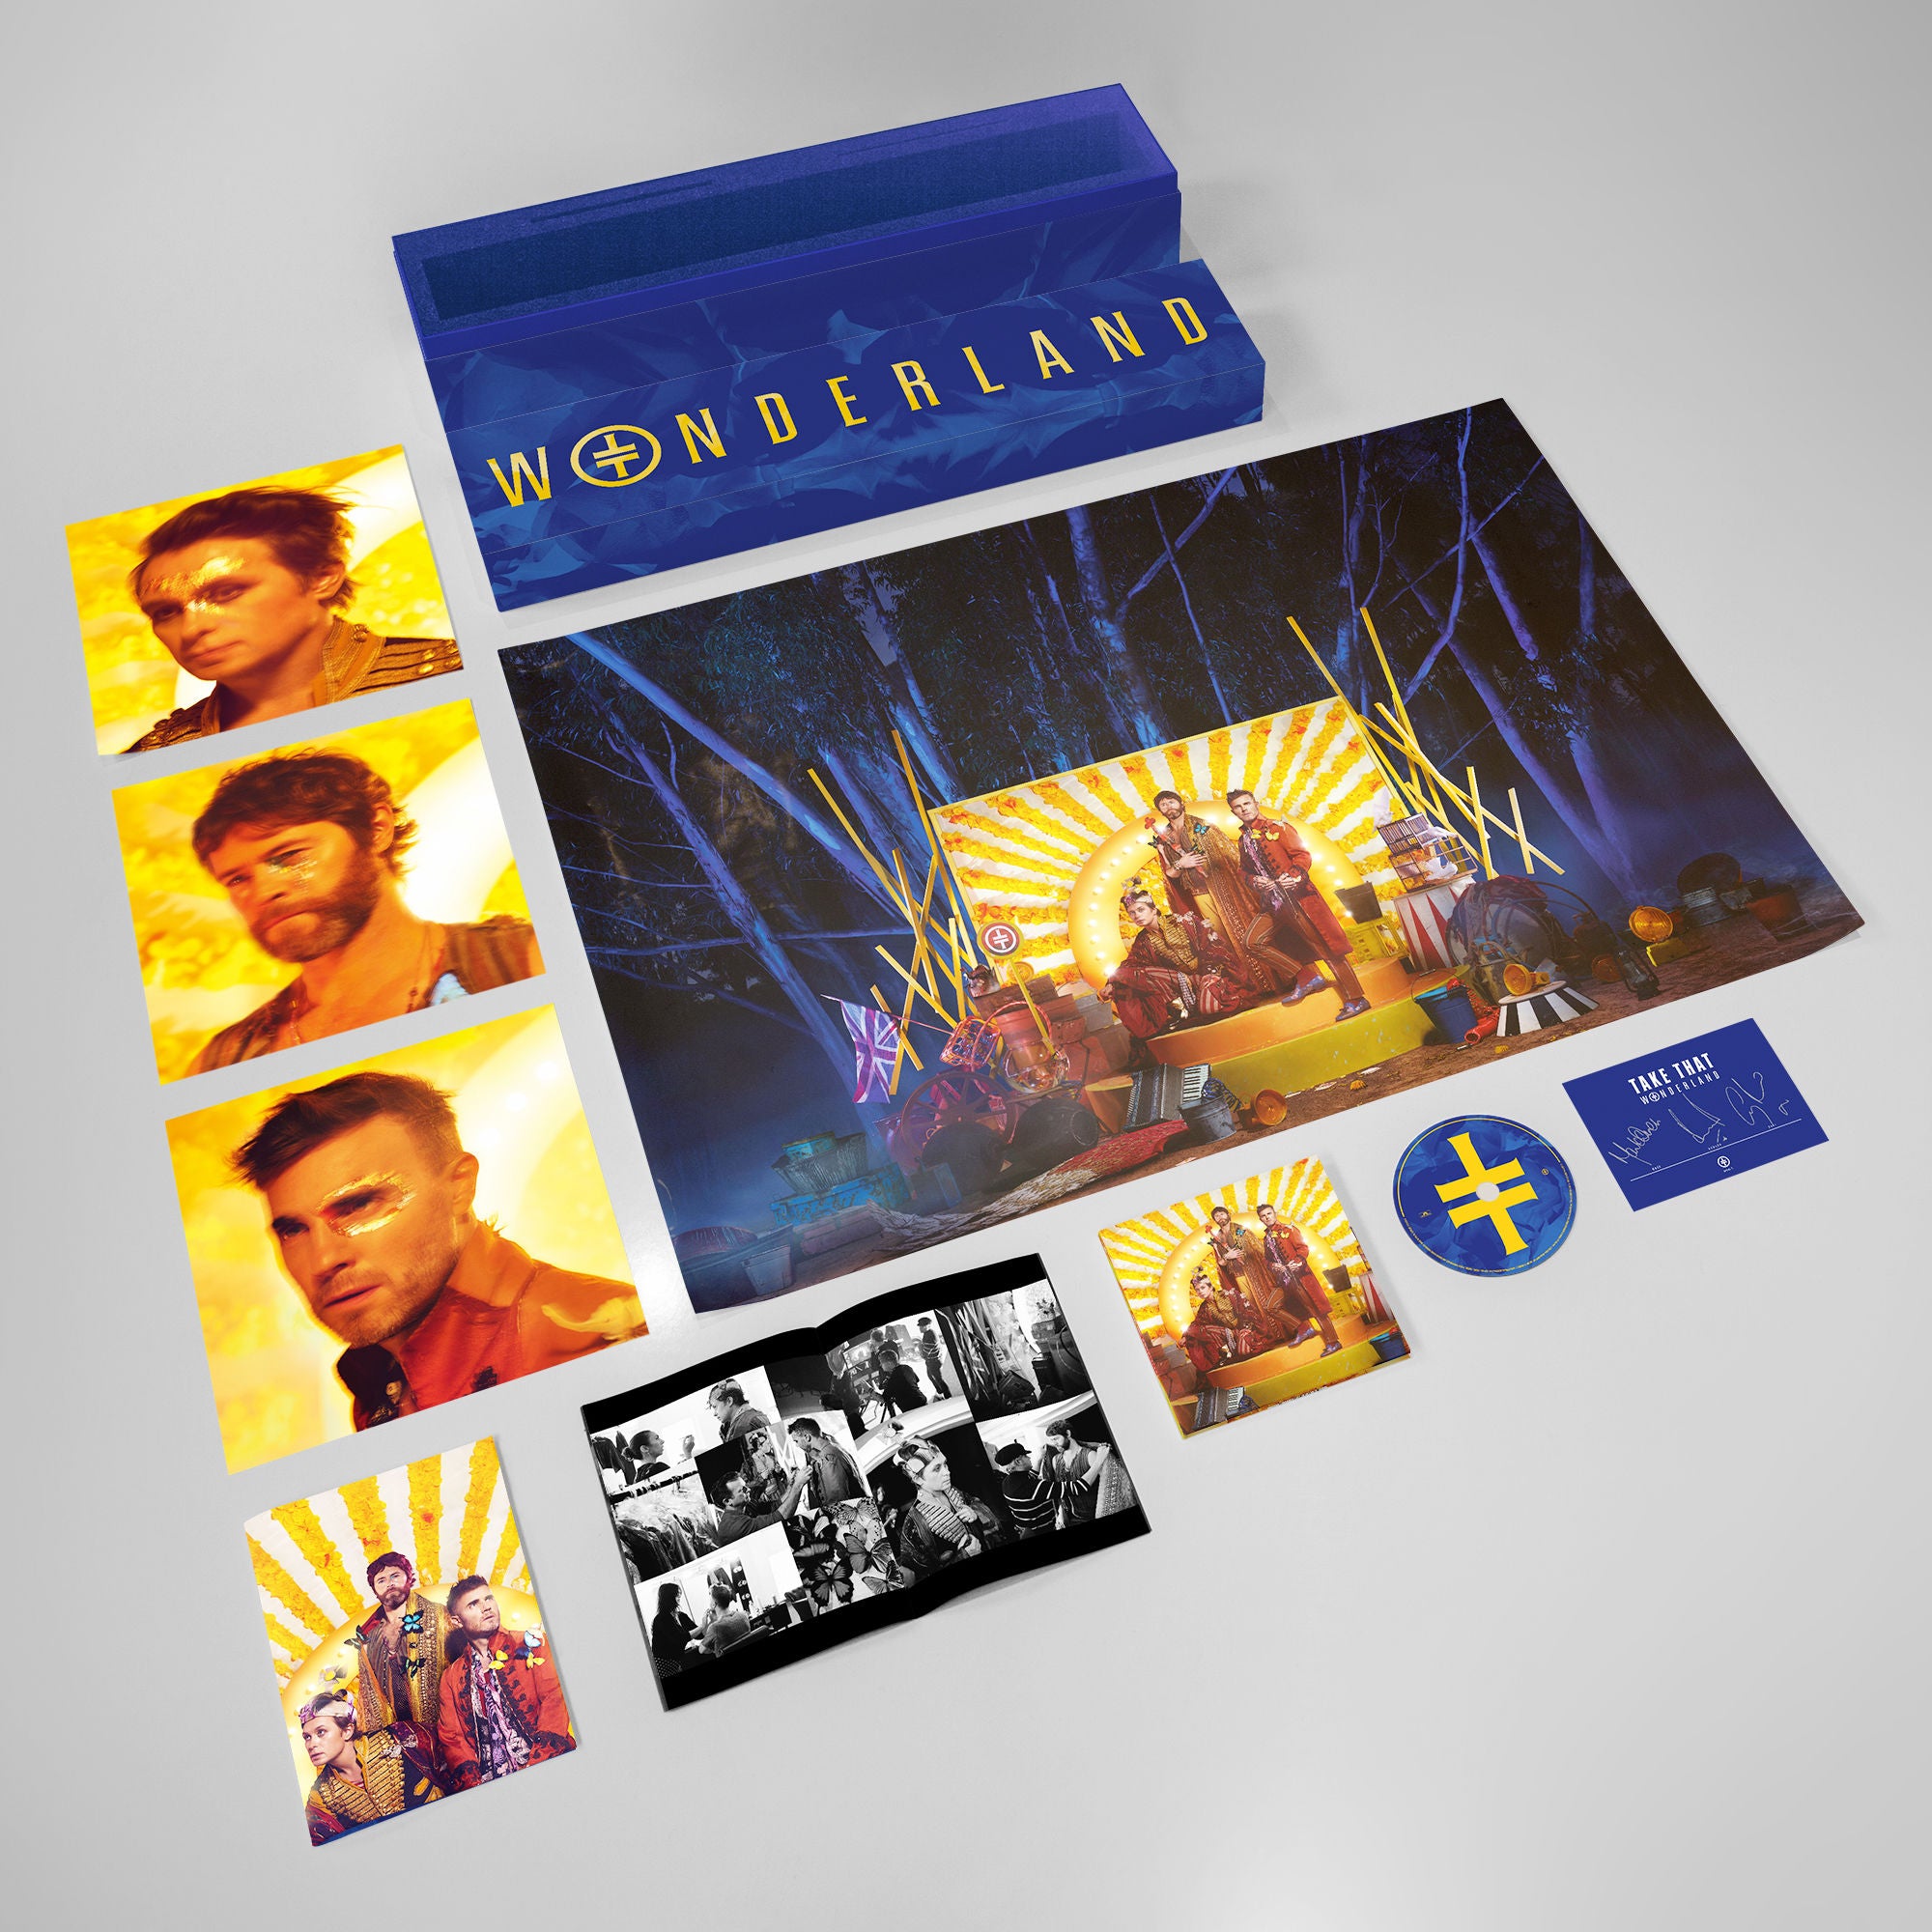 Take That - Wonderland Exclusive Super Deluxe Boxset